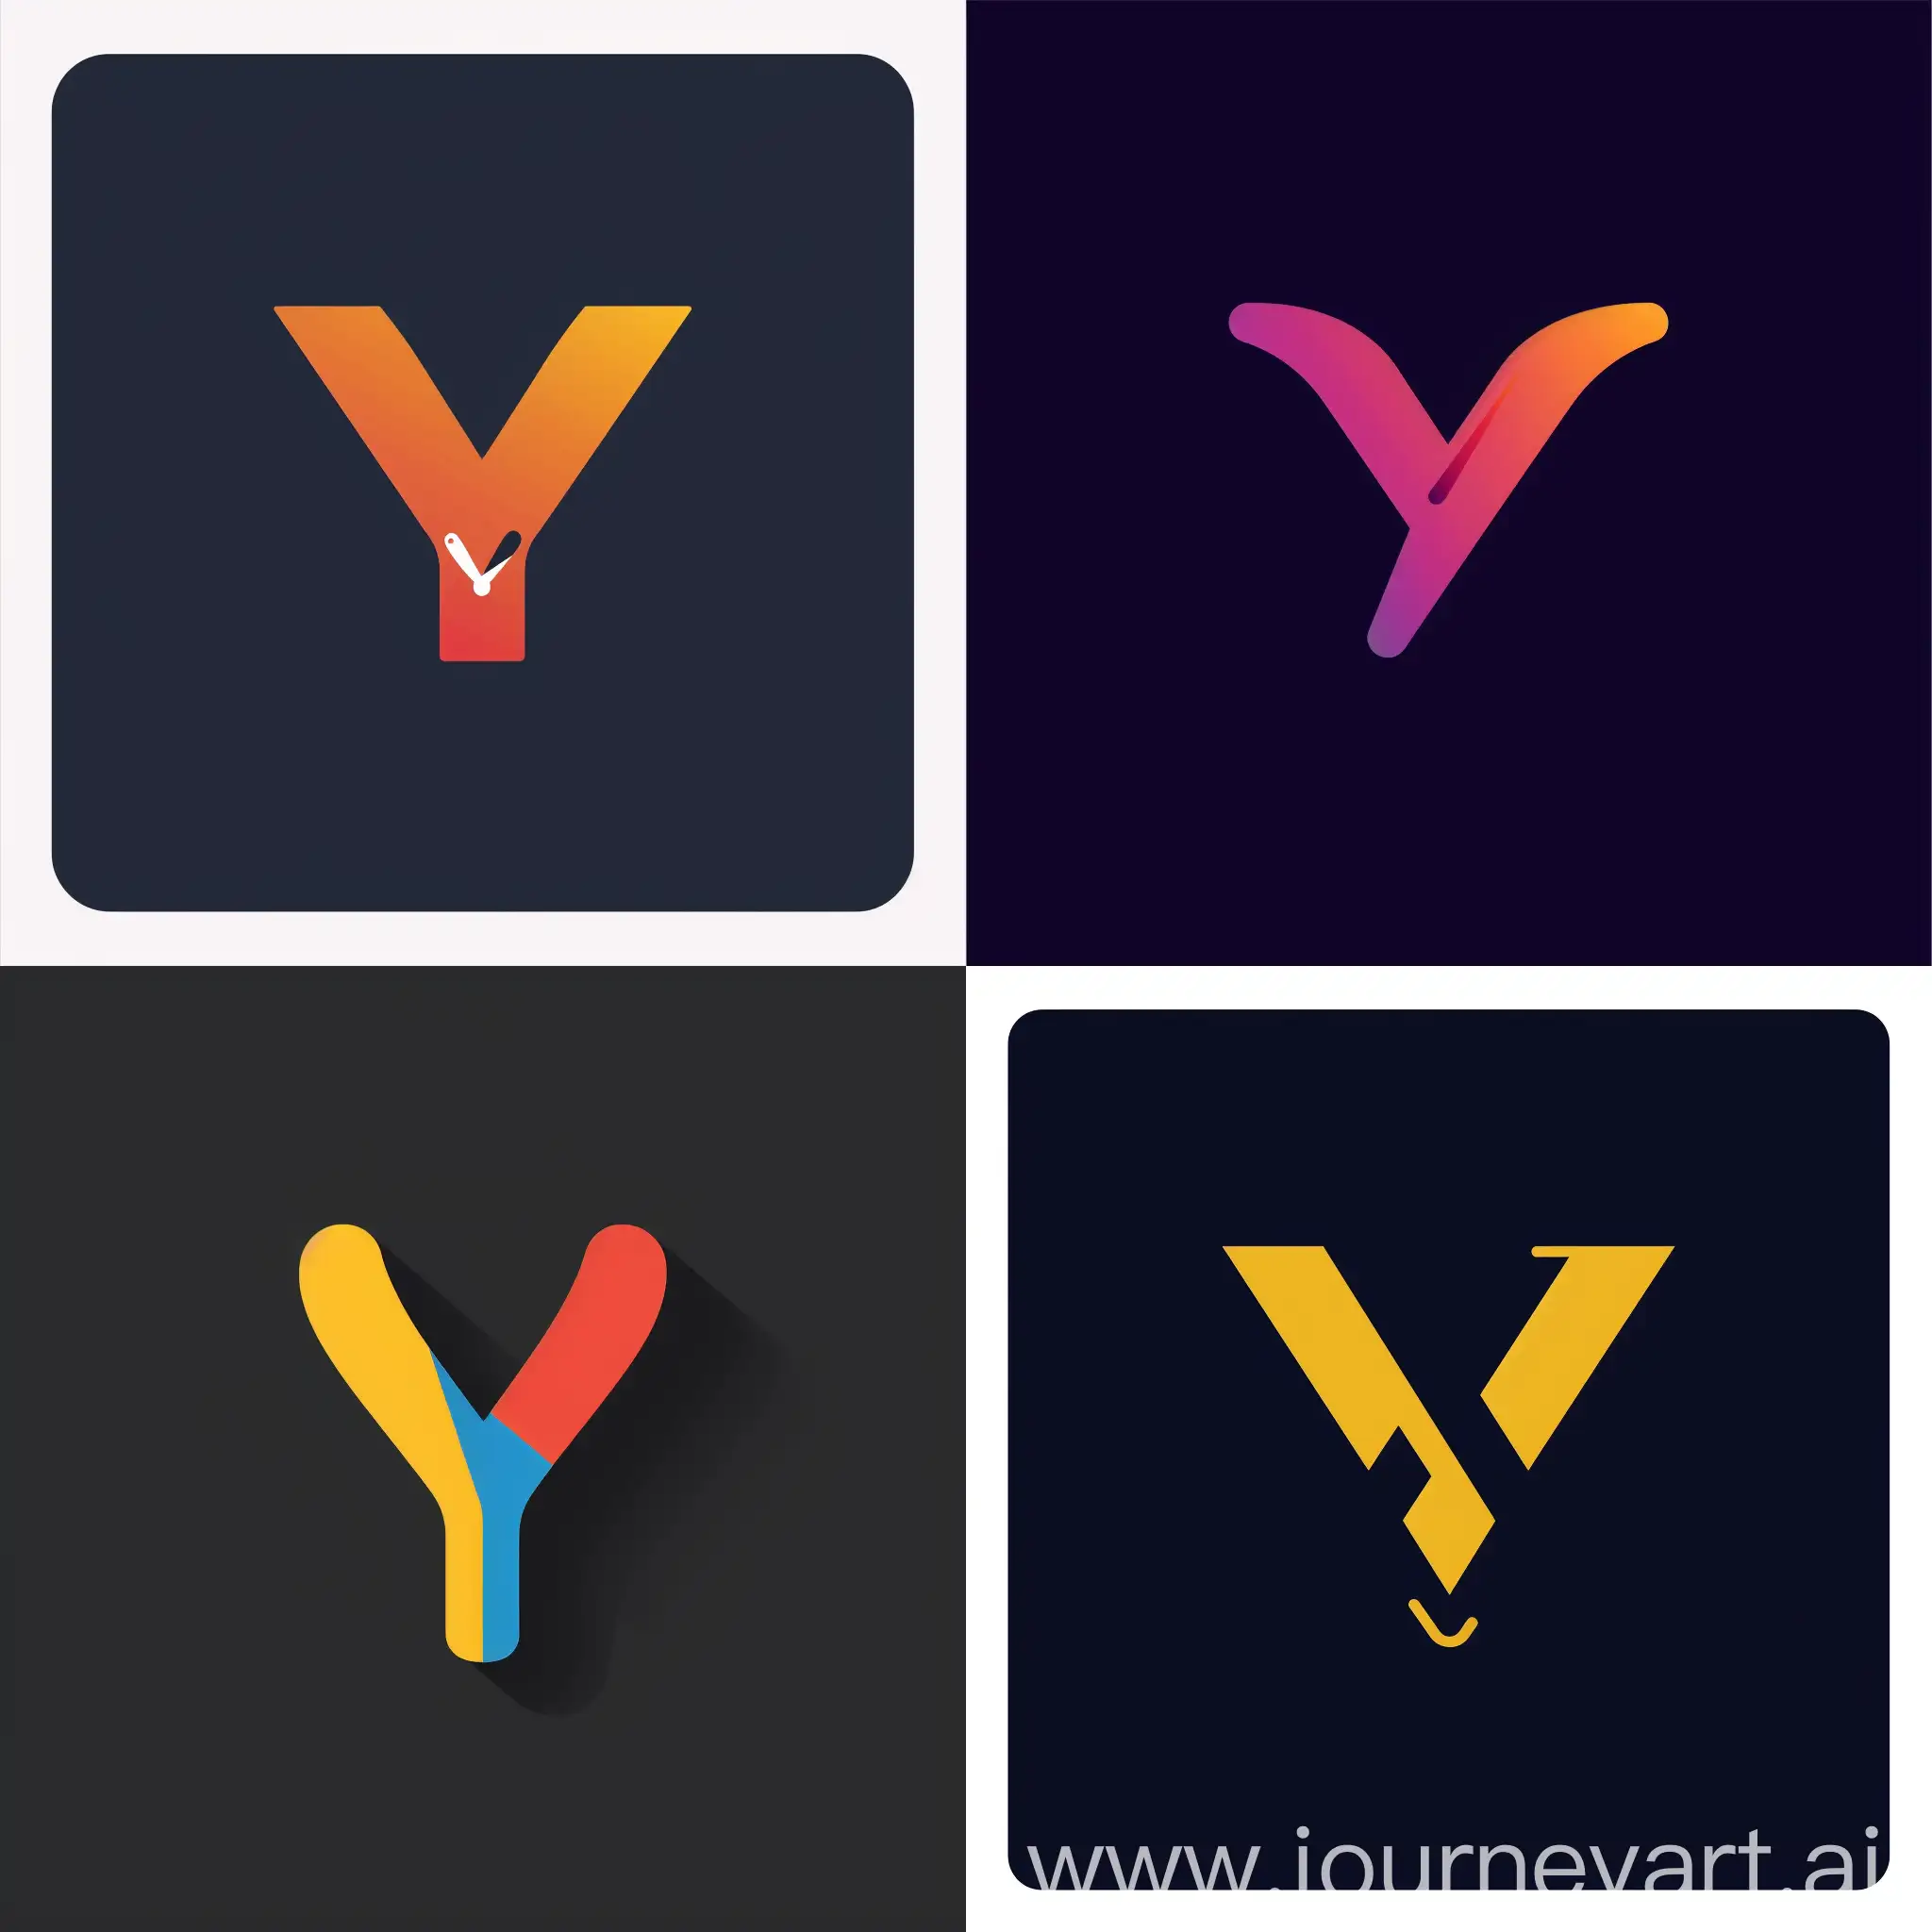 Flat-2D-Vector-Logo-Design-of-Letter-Y-for-Company-Branding